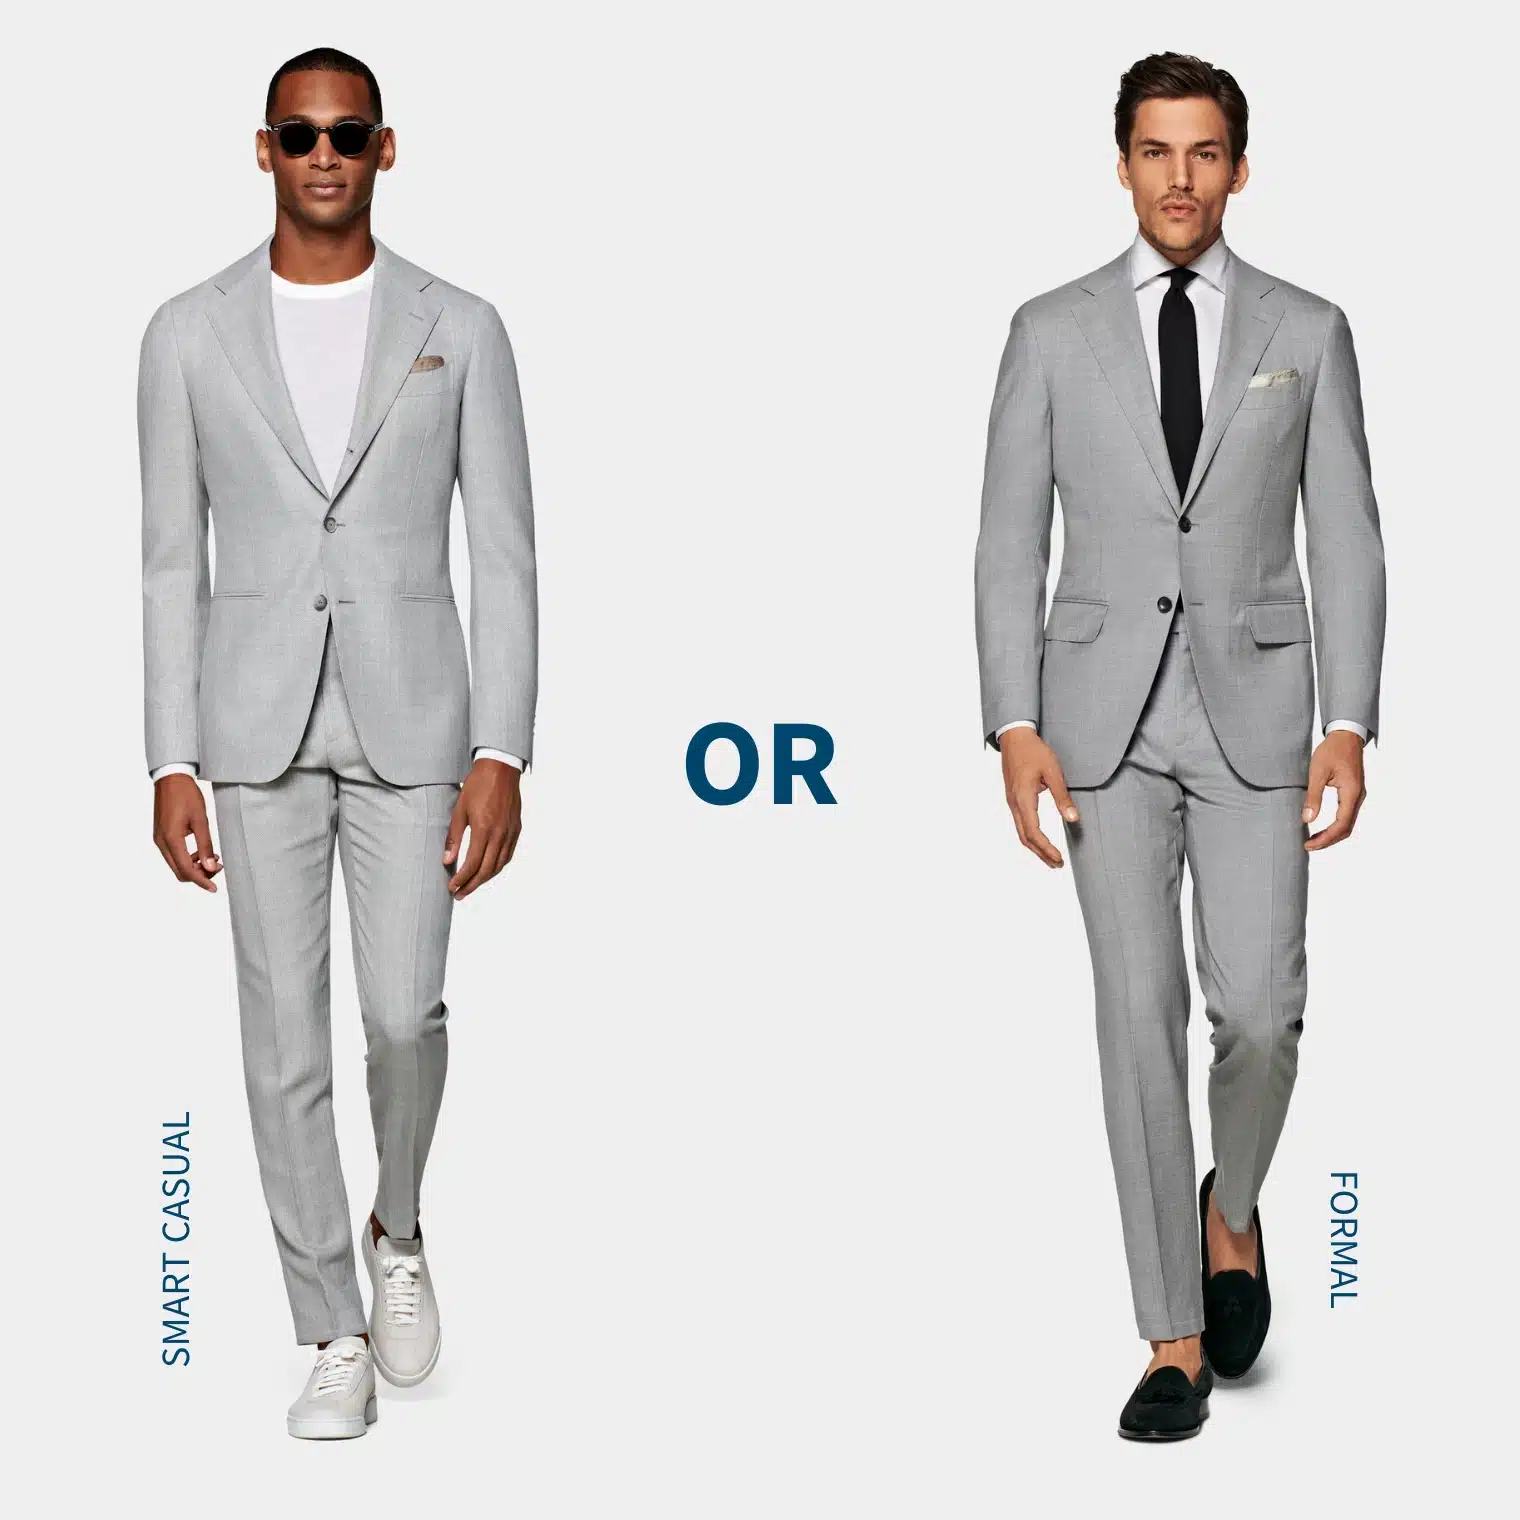 Smart casual vs formal suit